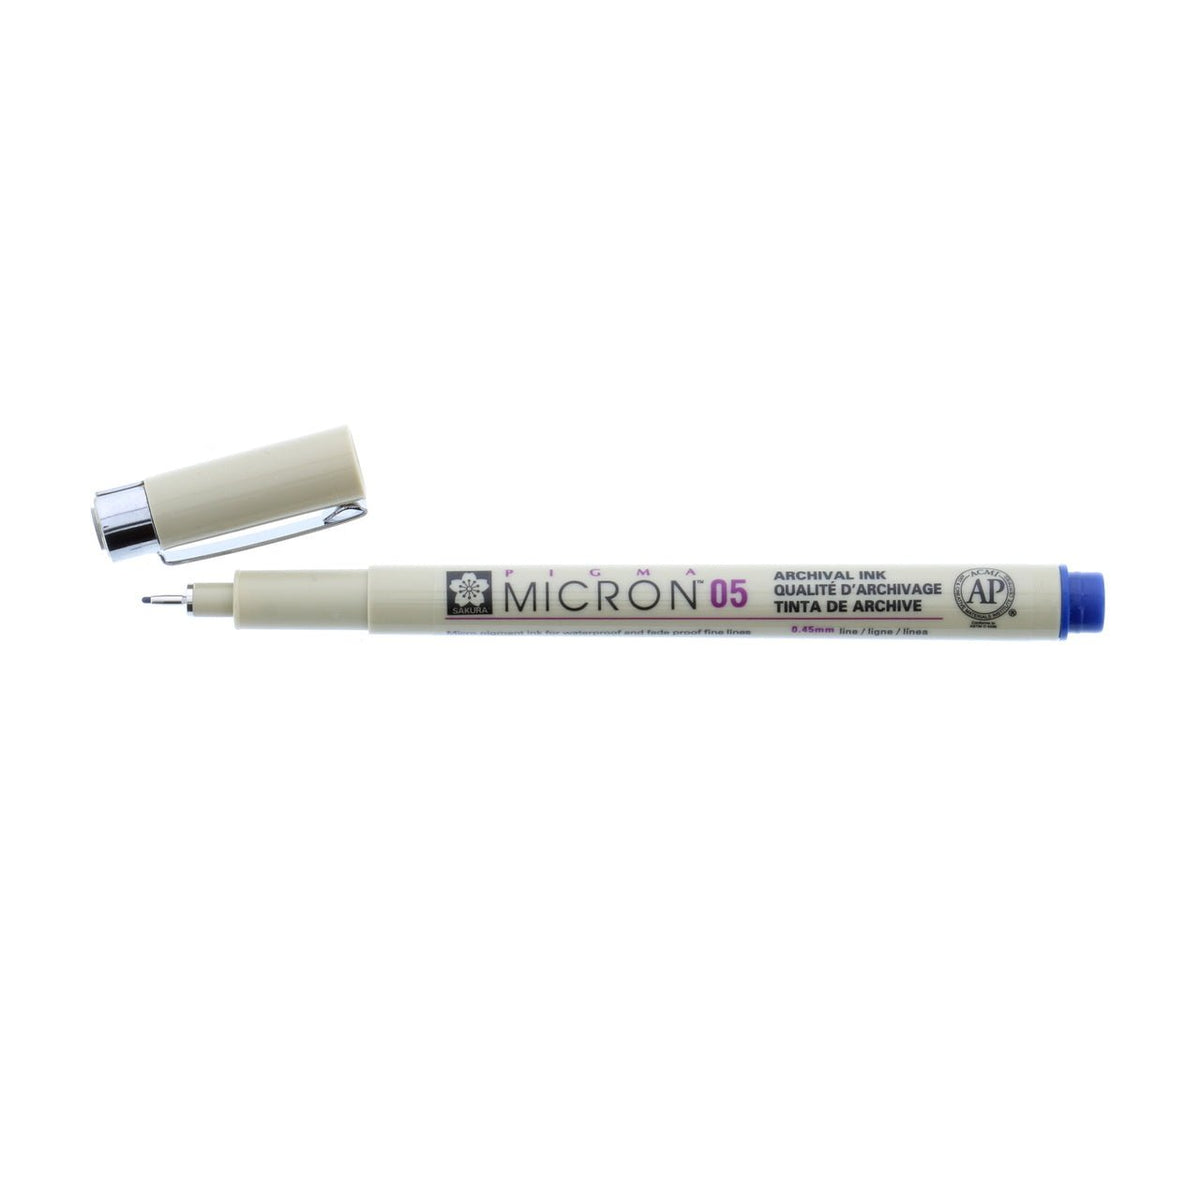 Sakura Pigma Micron Pigment Fineliner Pens 01/03/05/08/10/12 Wallet of 6  Black Ink Fine Line Stationery Drawing Sketching Pen 